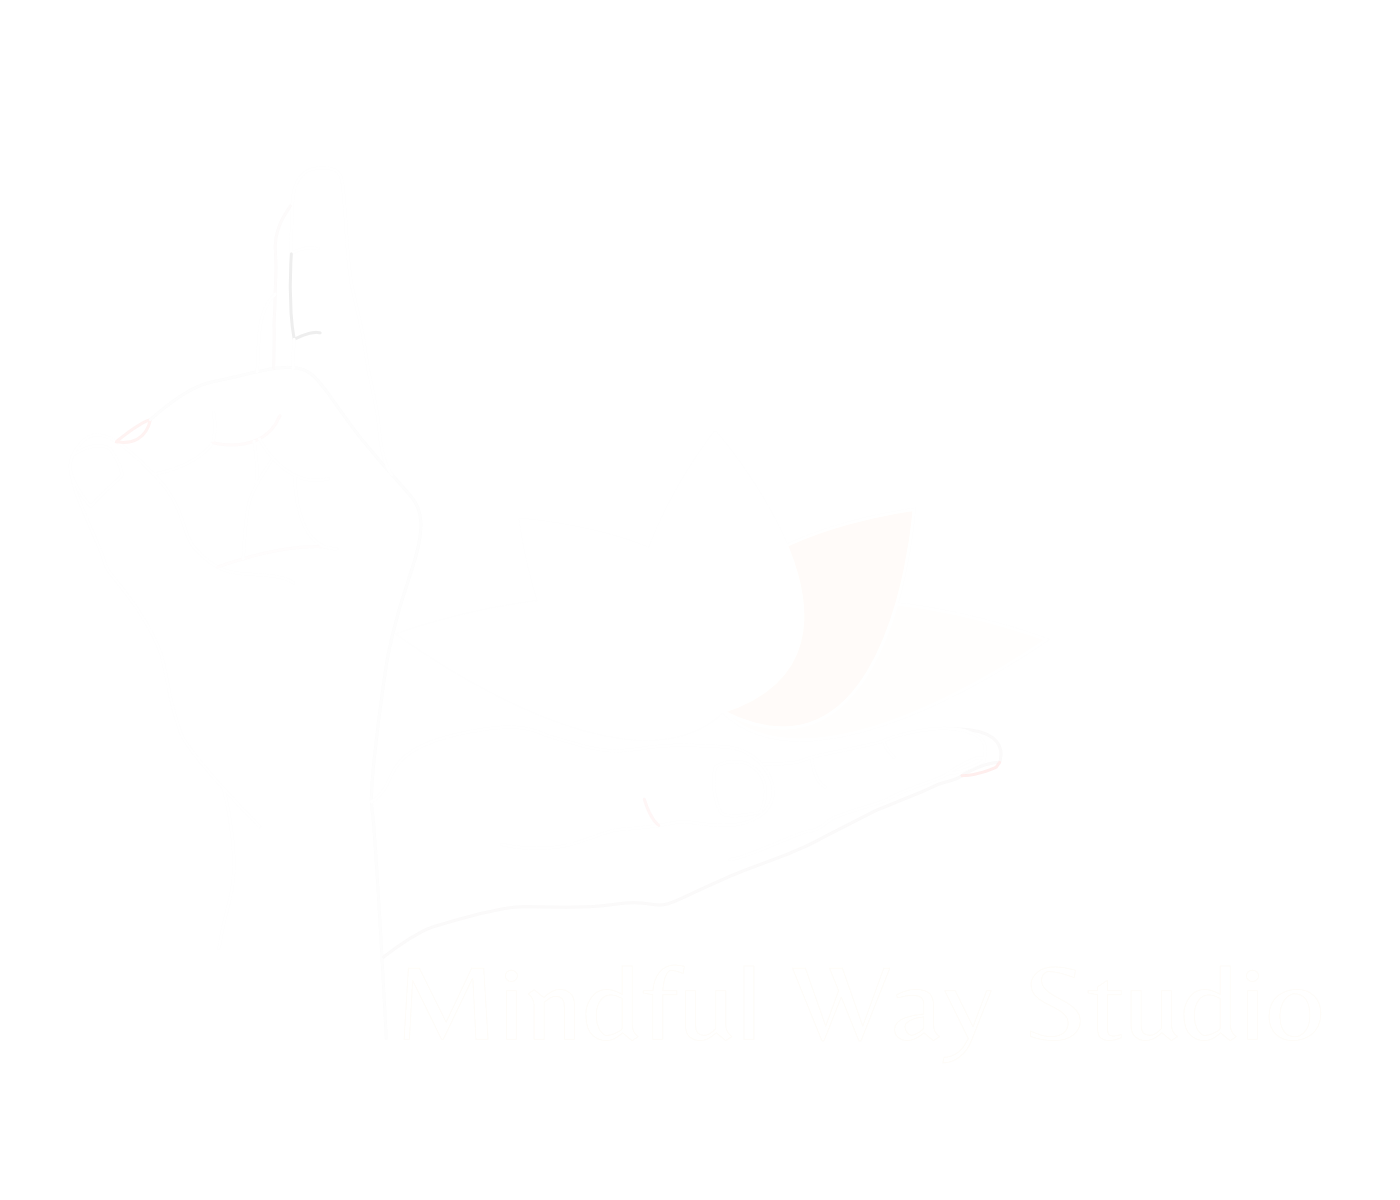 Mindful Way Studio